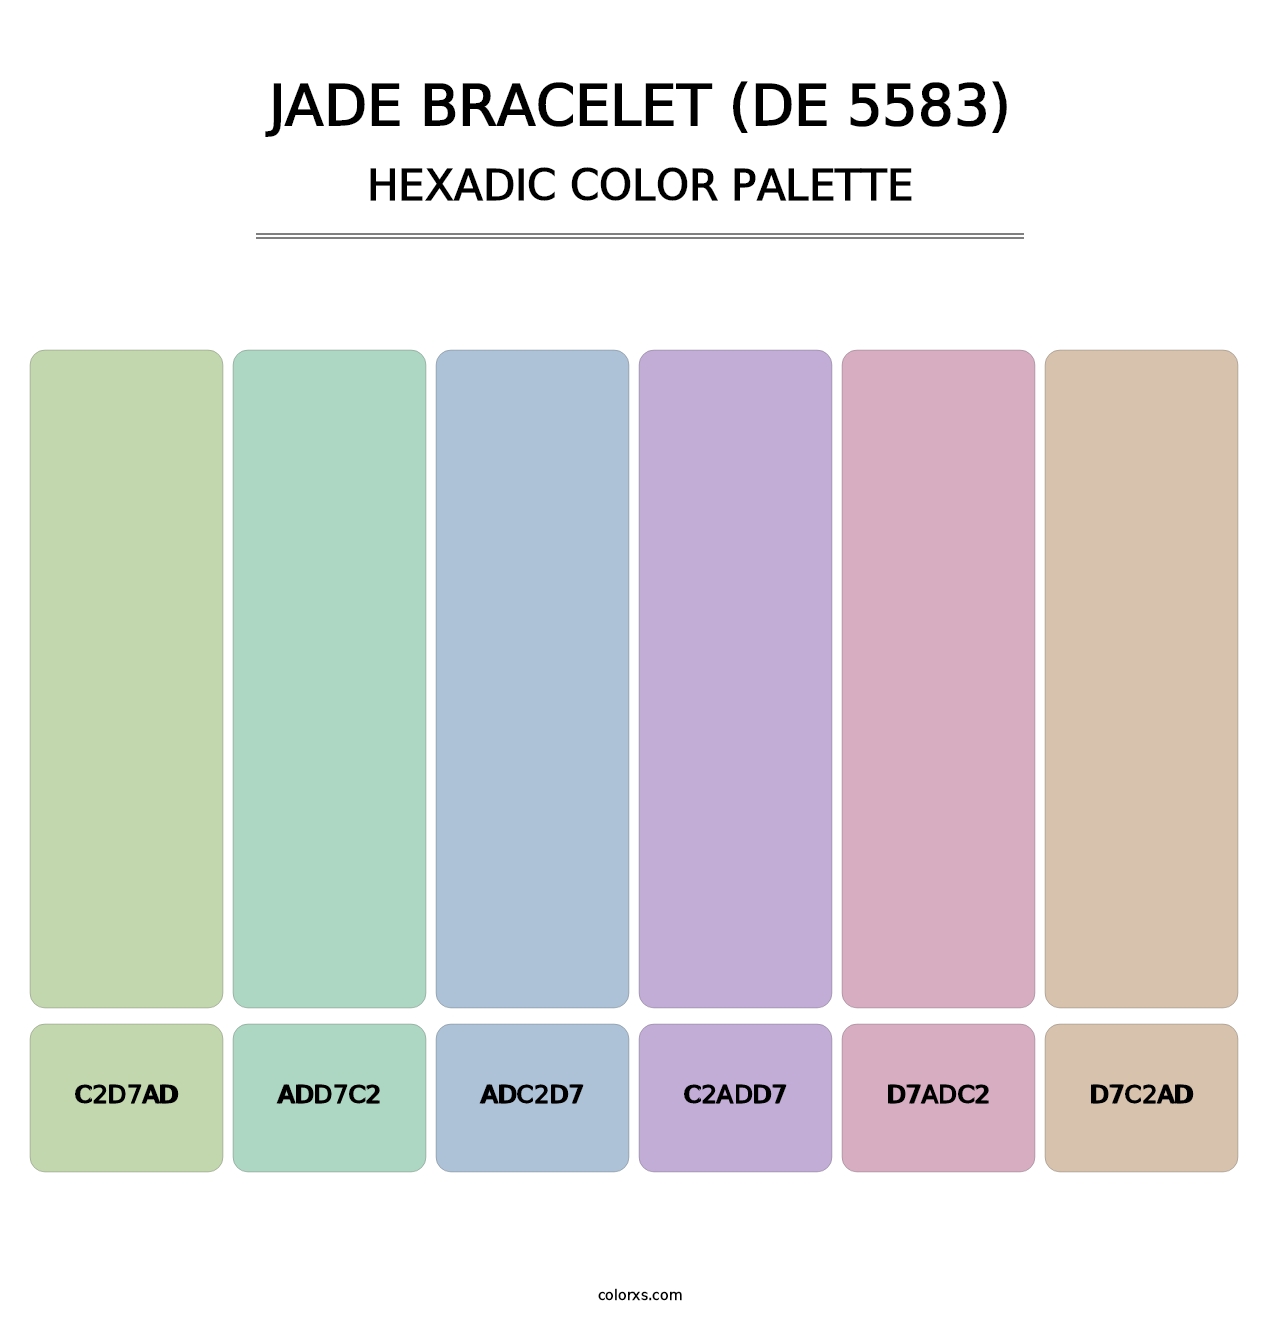 Jade Bracelet (DE 5583) - Hexadic Color Palette